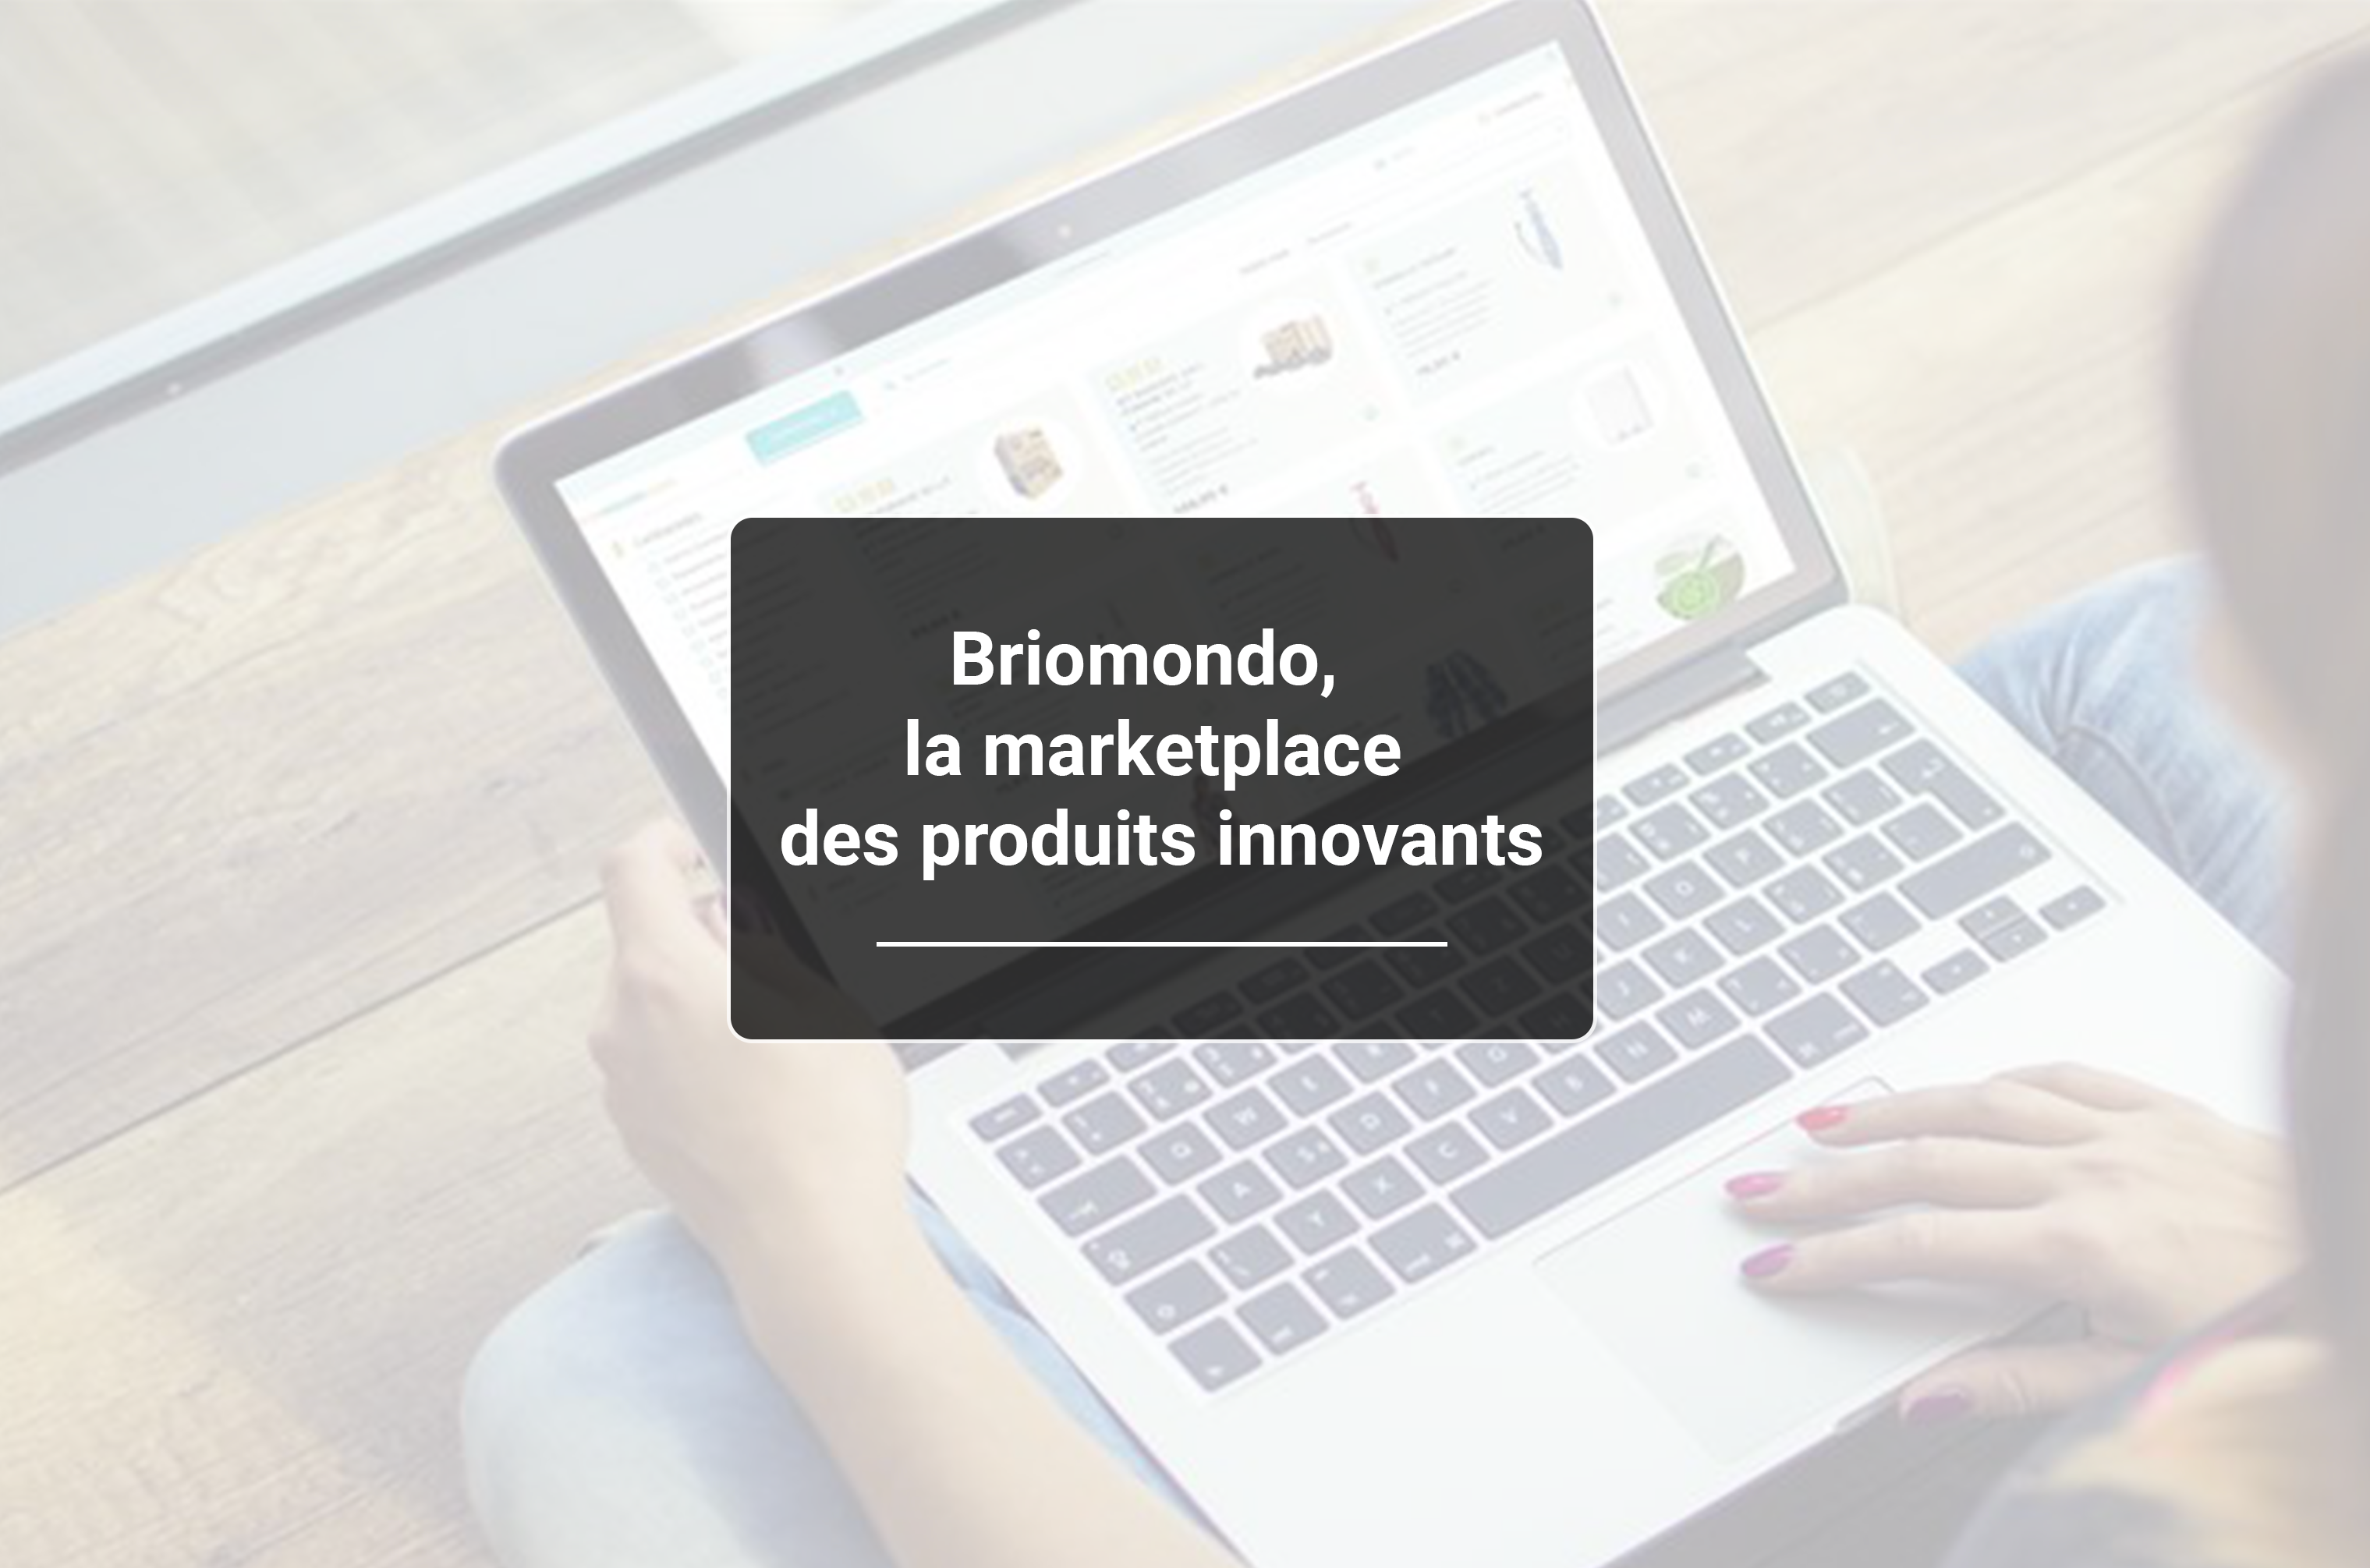 Briomondo, la marketplace des produits innovants conçus en France